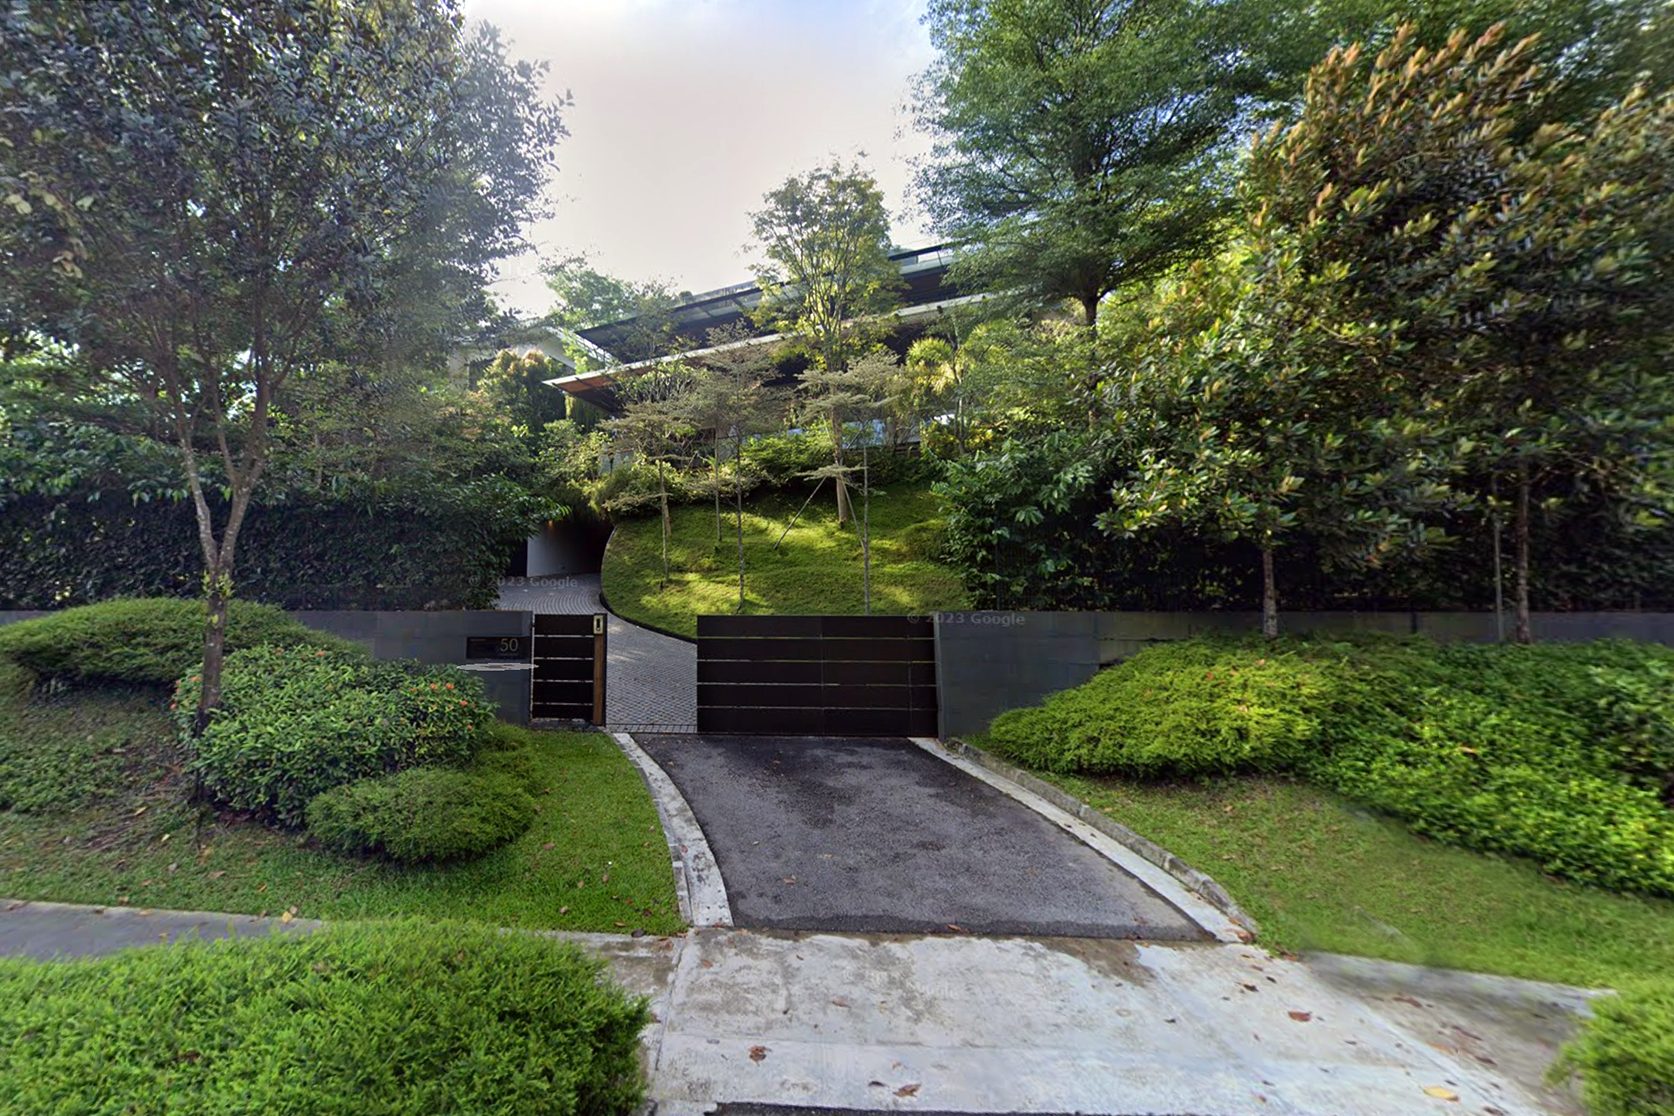 James Dyson buy bungalow in Singapore